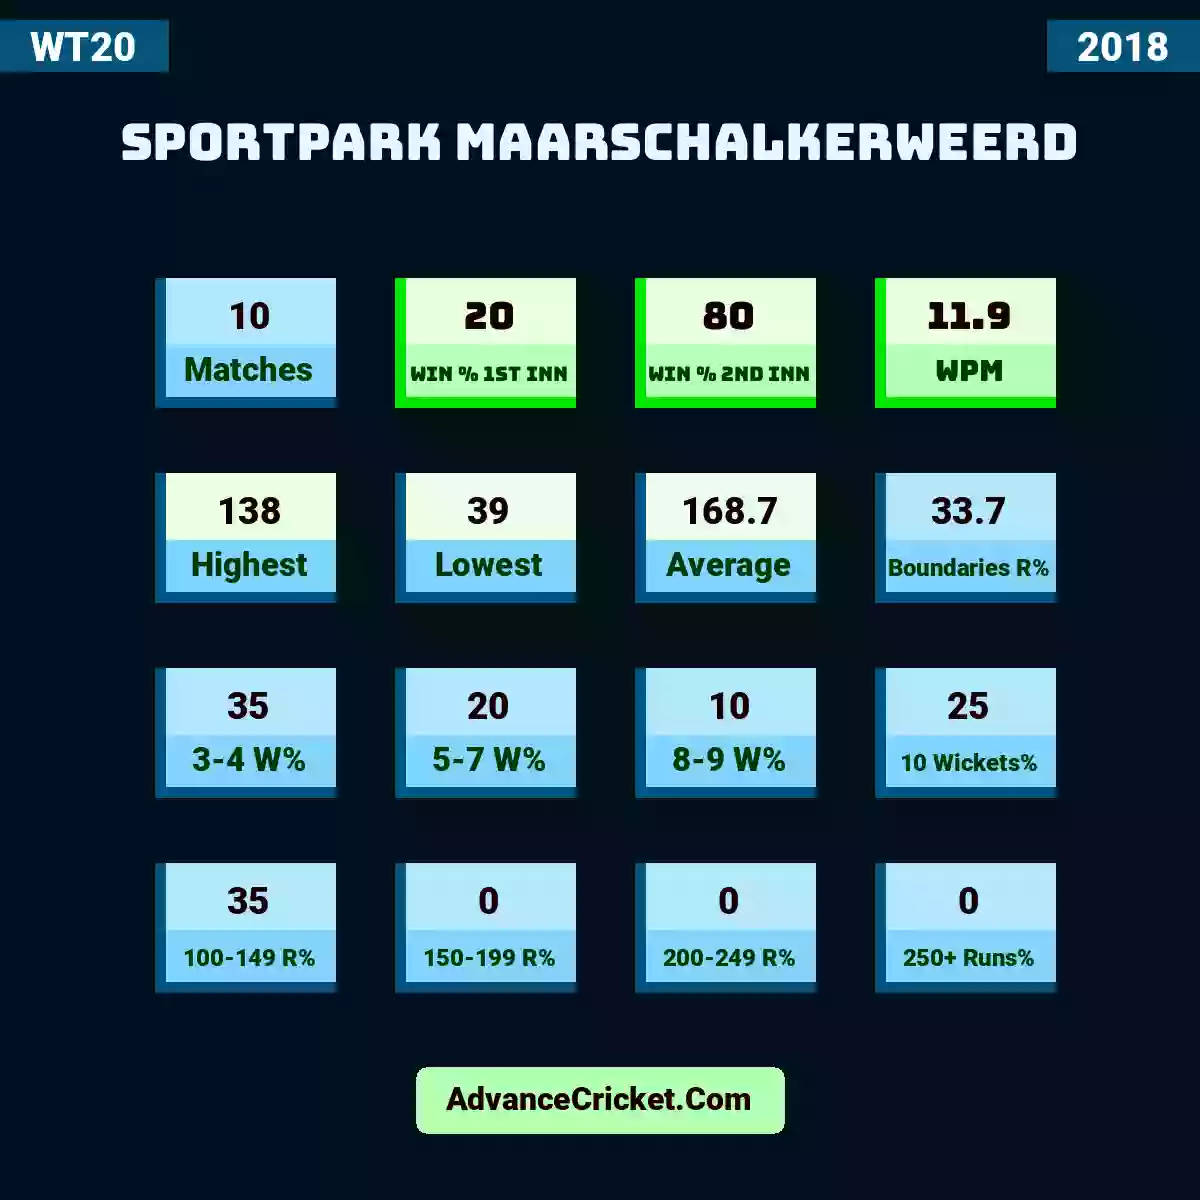 Image showing Sportpark Maarschalkerweerd with Matches: 10, Win % 1st Inn: 20, Win % 2nd Inn: 80, WPM: 11.9, Highest: 138, Lowest: 39, Average: 168.7, Boundaries R%: 33.7, 3-4 W%: 35, 5-7 W%: 20, 8-9 W%: 10, 10 Wickets%: 25, 100-149 R%: 35, 150-199 R%: 0, 200-249 R%: 0, 250+ Runs%: 0.